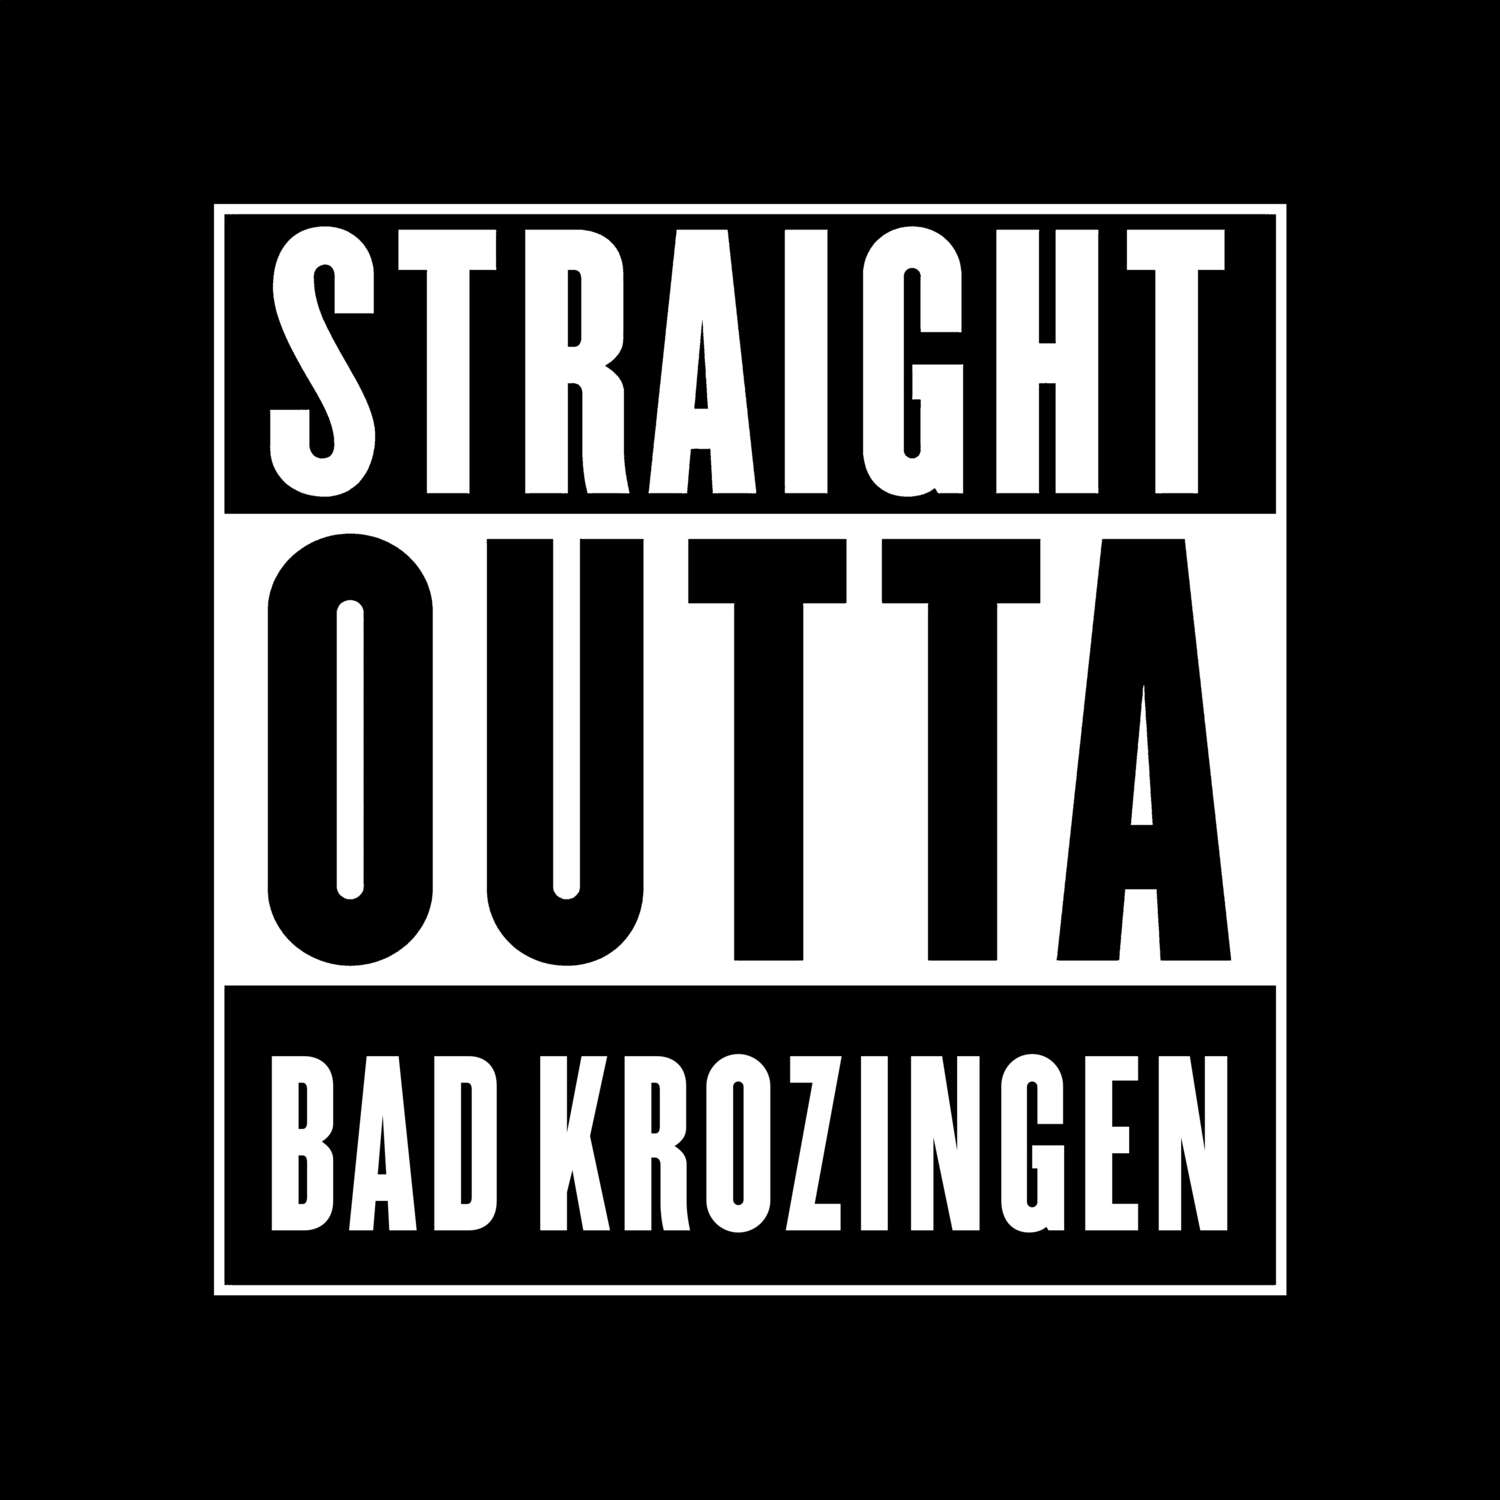 Bad Krozingen T-Shirt »Straight Outta«